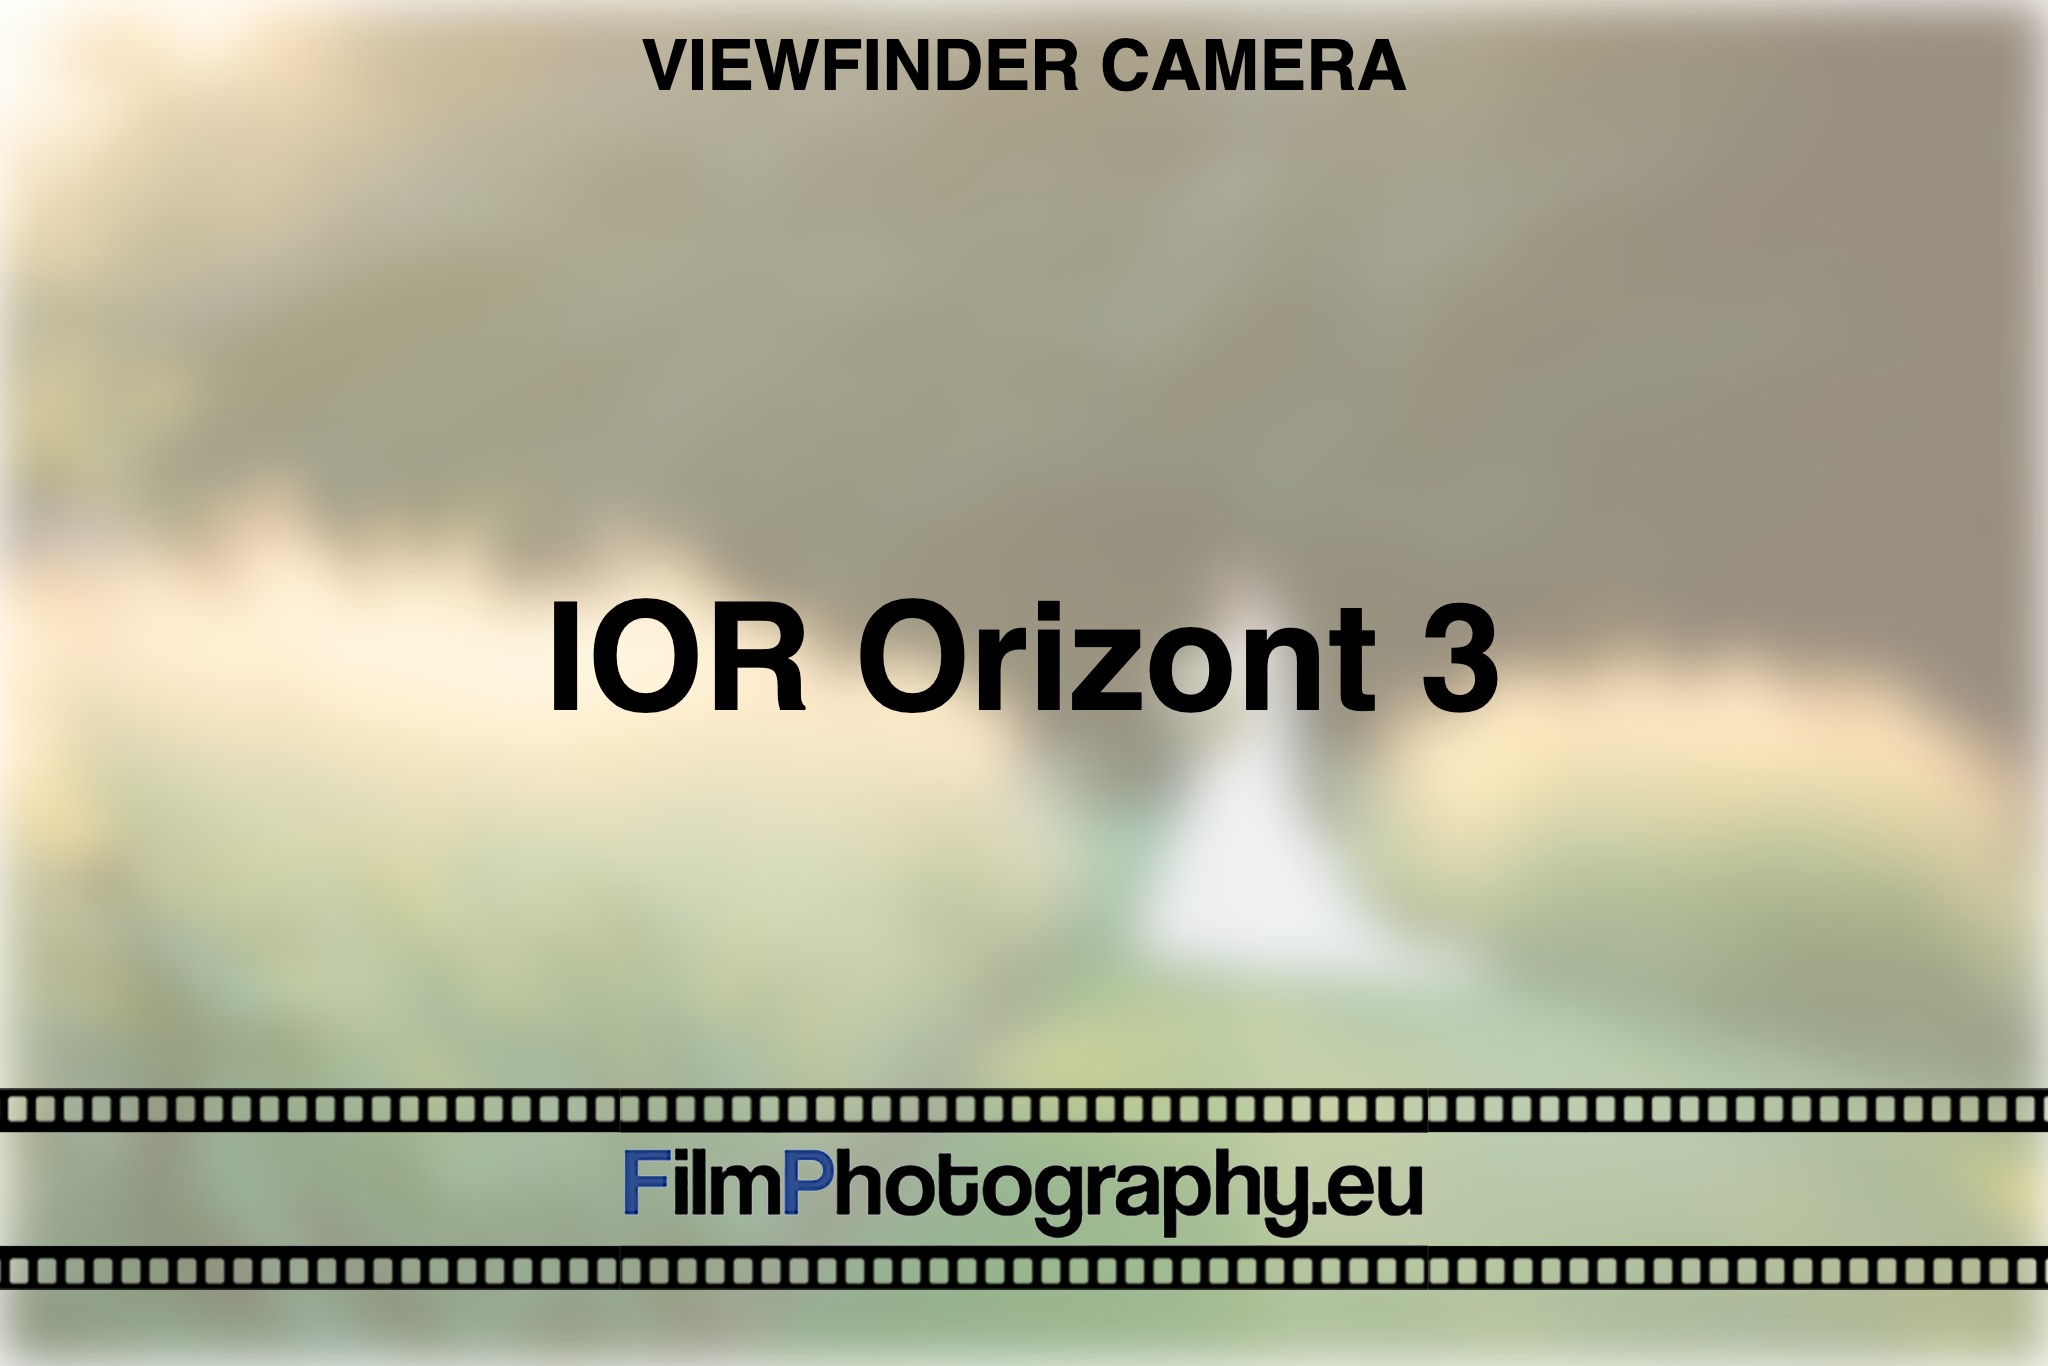 ior-orizont-3-viewfinder-camera-bnv